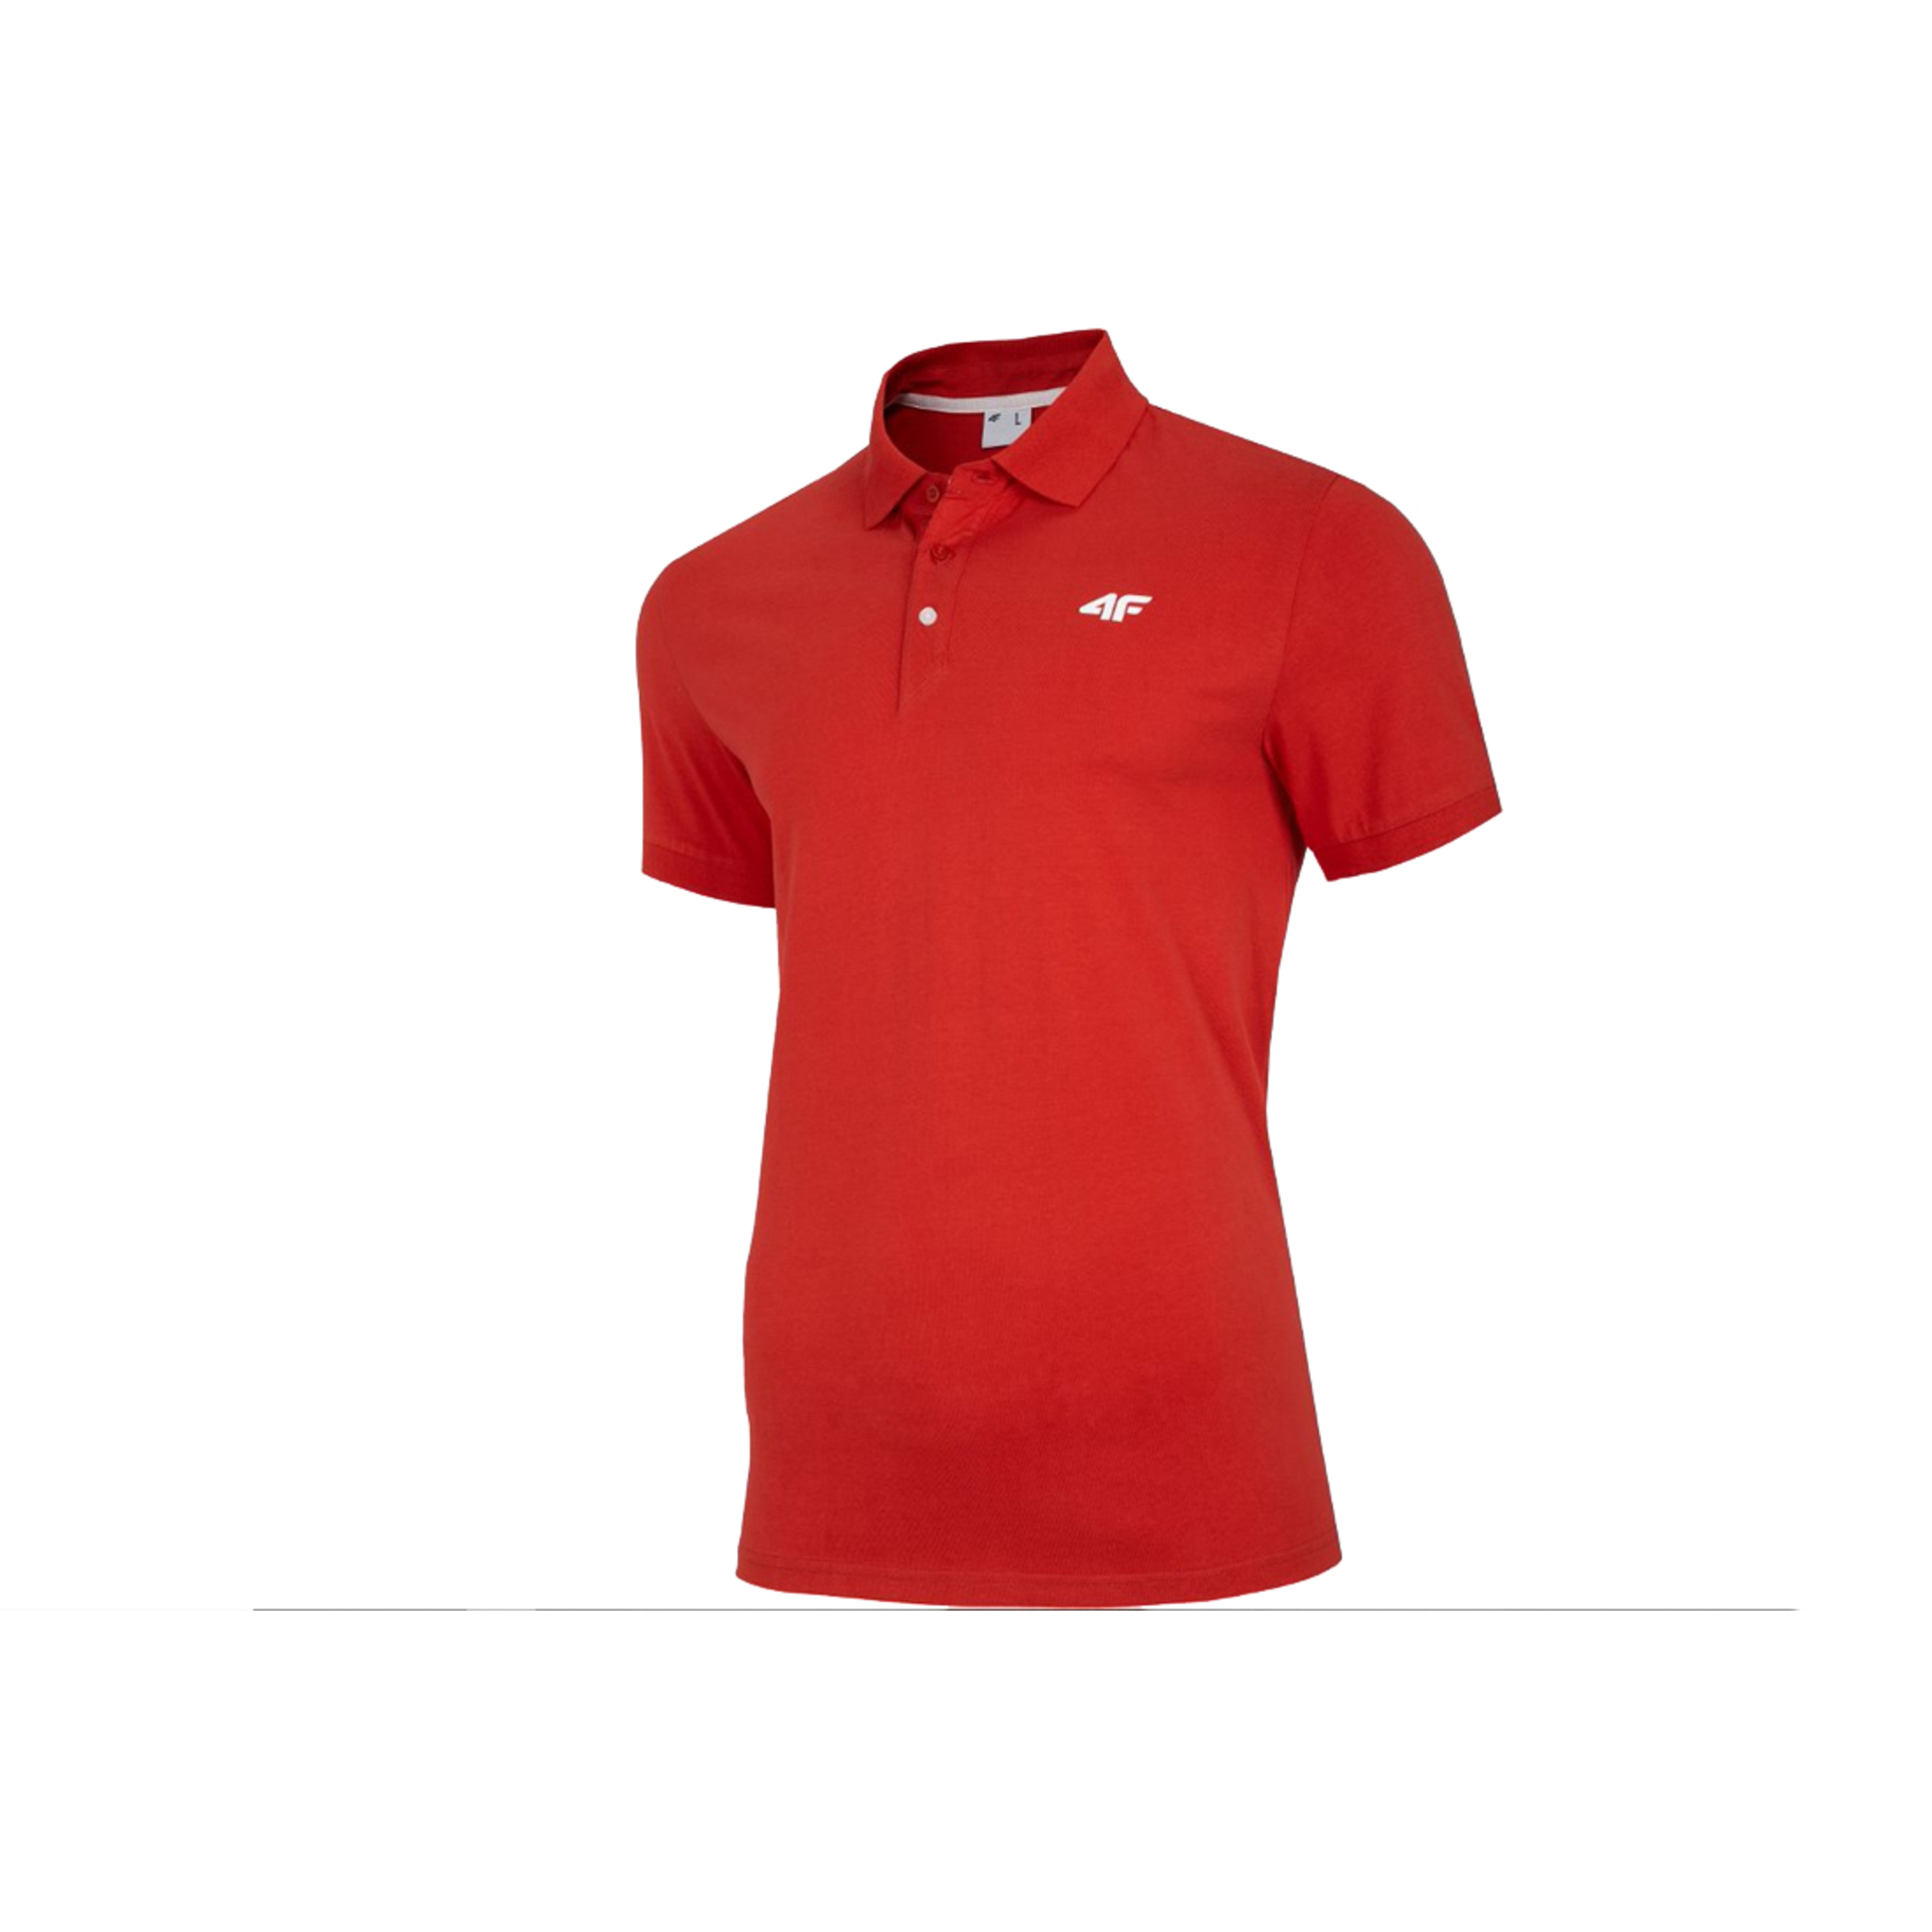 4f Men's T-shirt Polo Nosh4-tsm007-62s - rojo - Hombres, Rojo, Camiseta  MKP